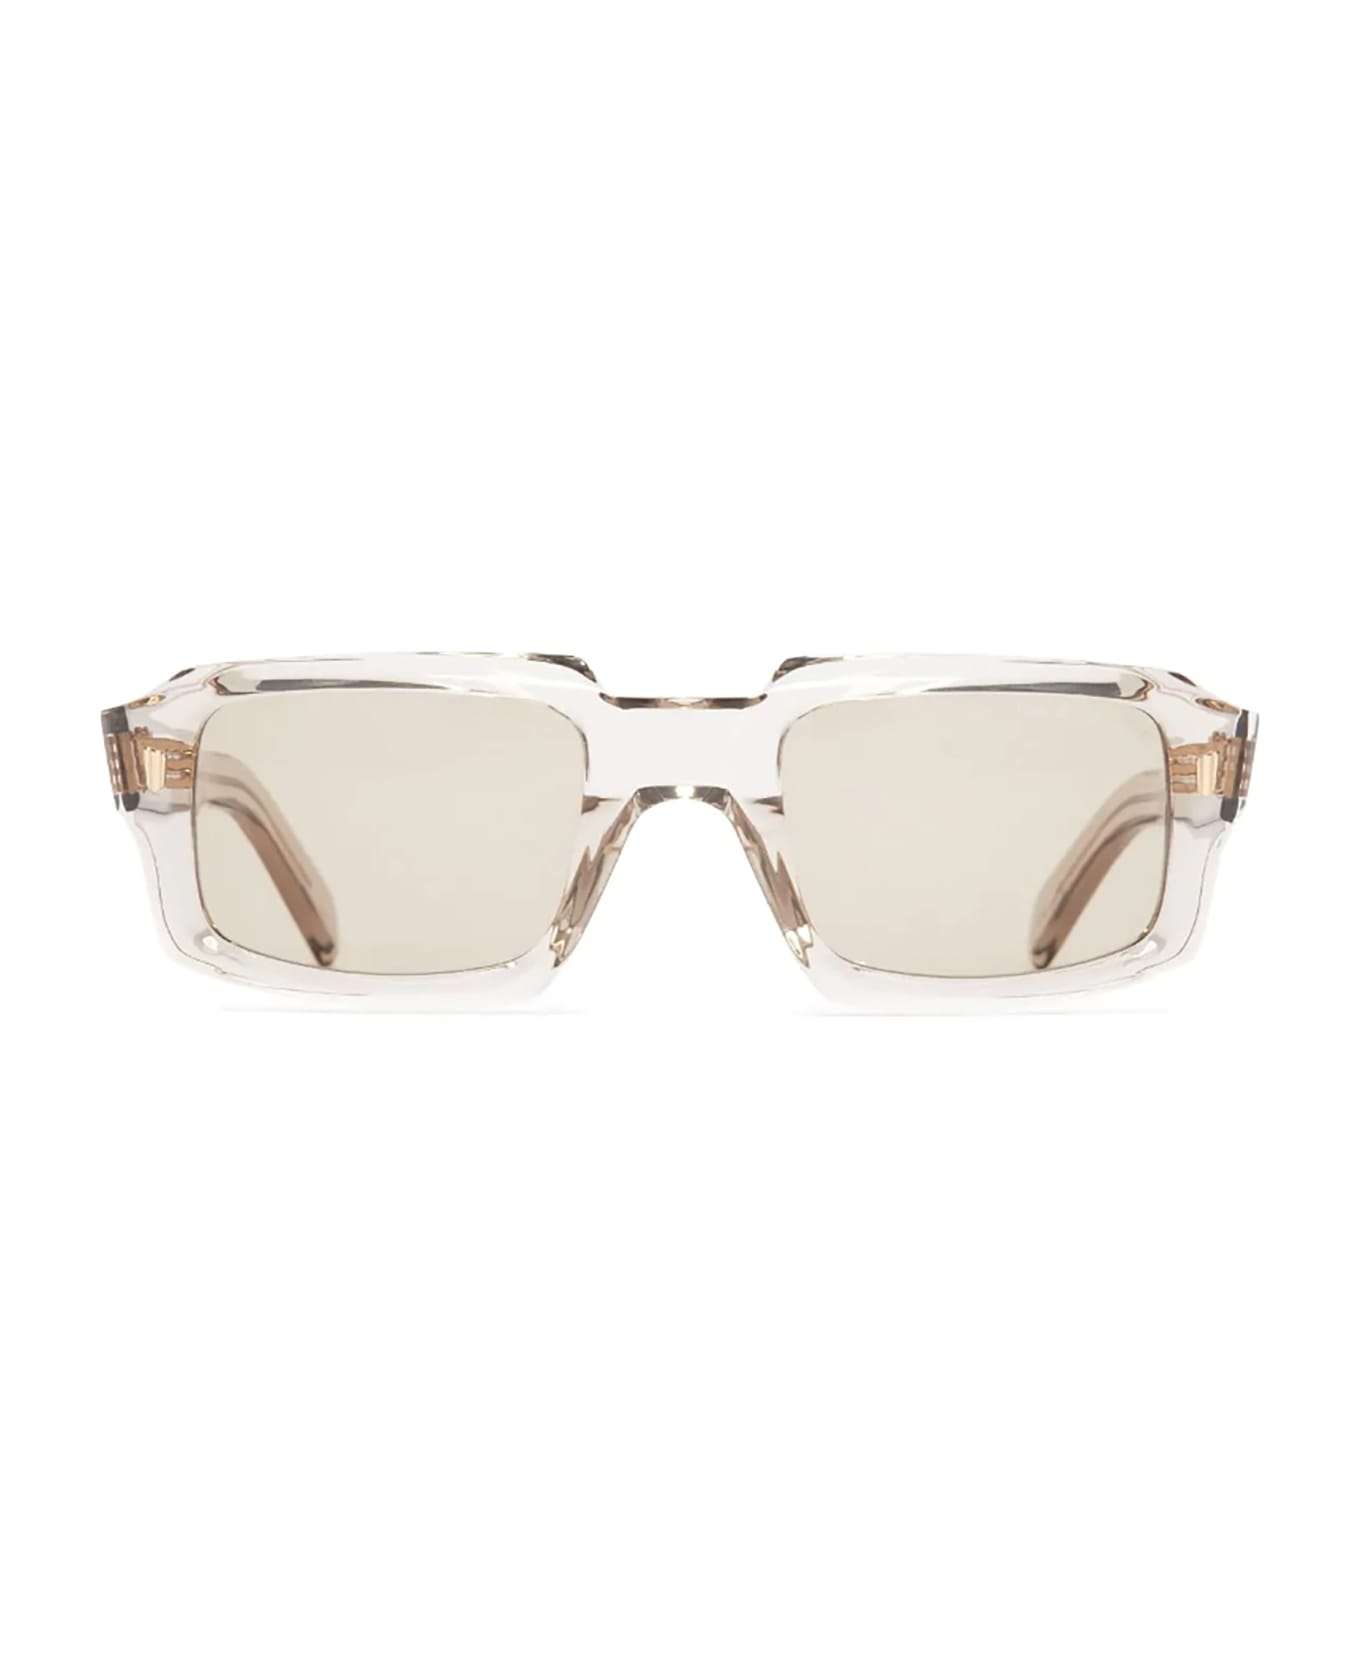 Cutler and Gross 9495 Sunglasses - Sand Crystal サングラス